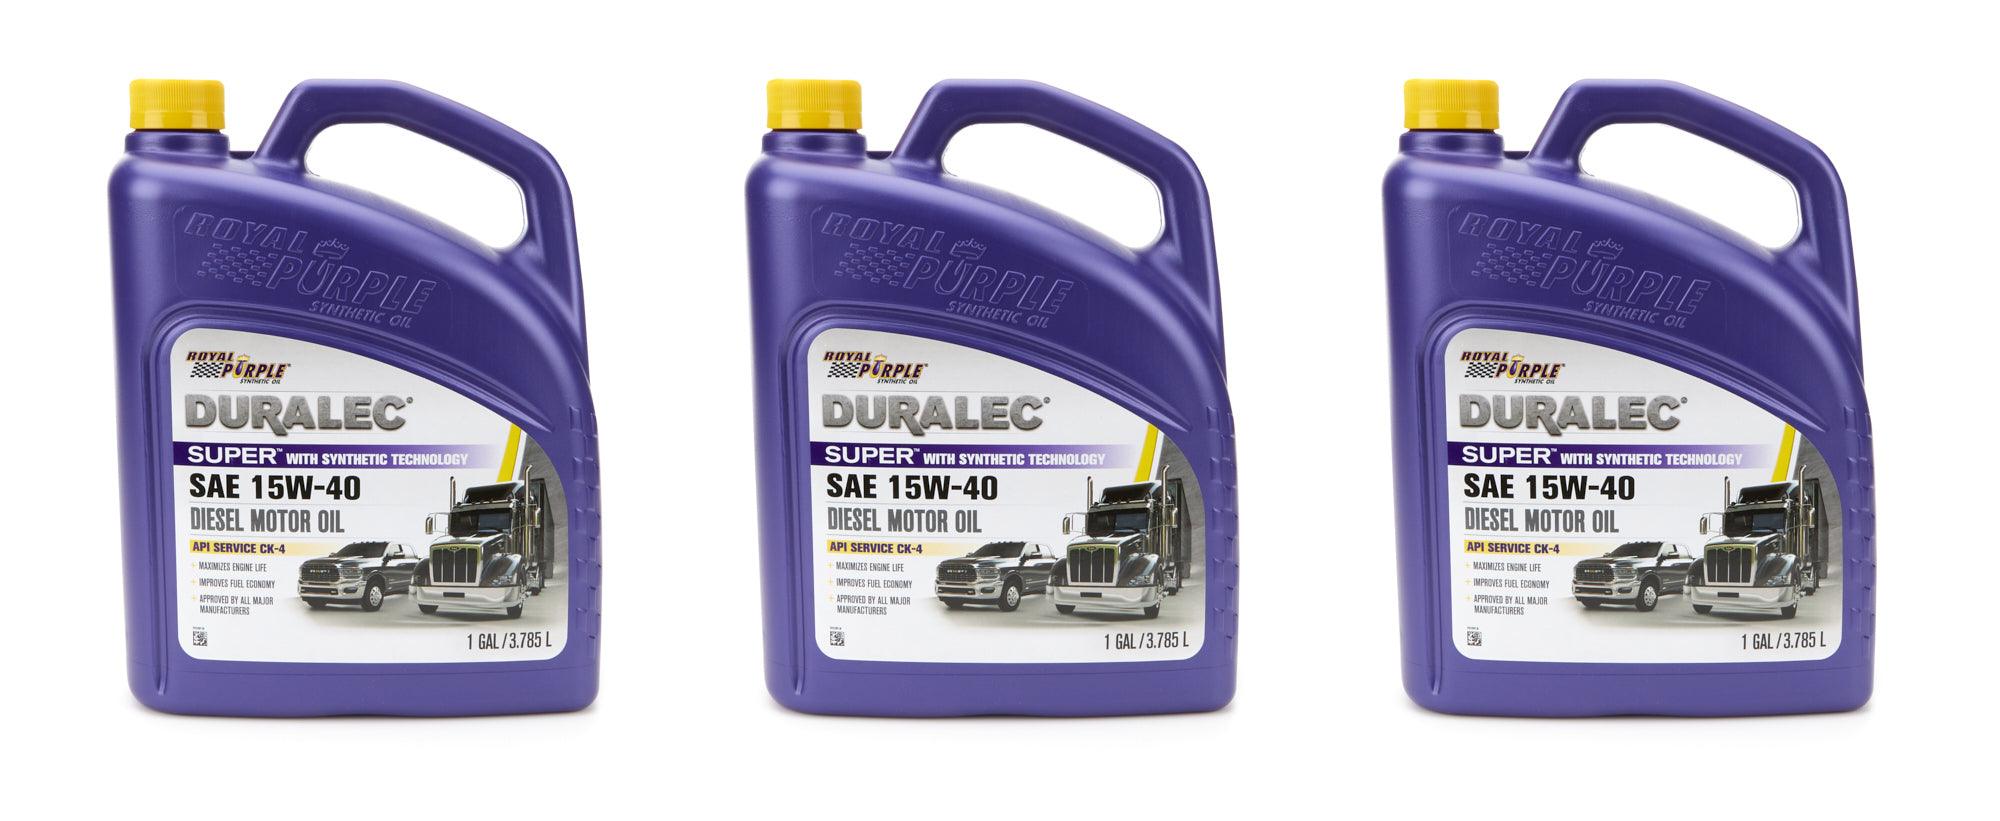 Duralec Super 15w40 Oil Case 3x1 Gallon - Burlile Performance Products